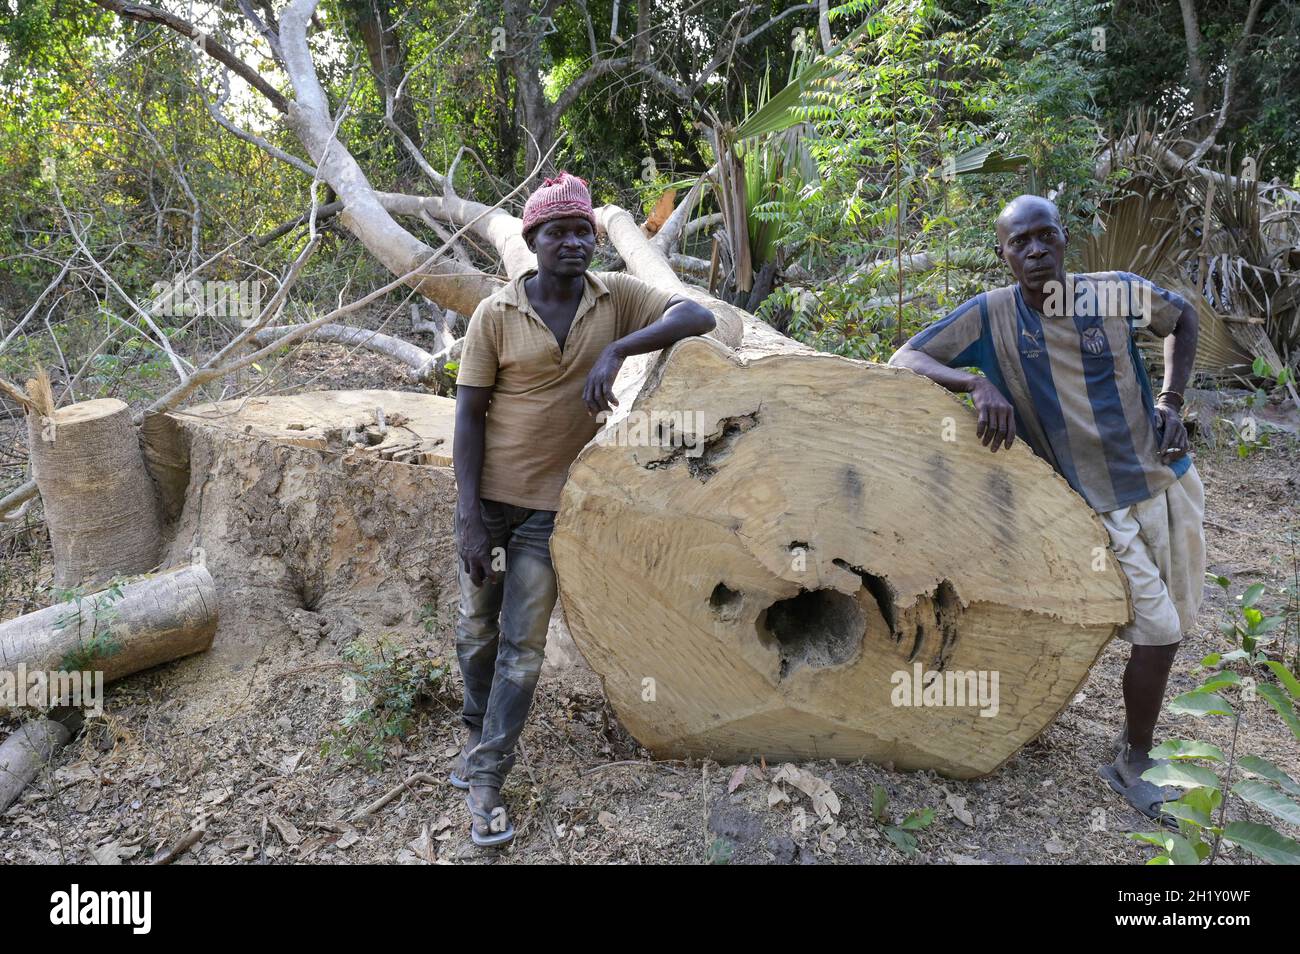 SENEGAL, Casamance, Ziguinchor, deforestation, tree logging in Diola tribe village / Abholzung, Handel mit illegalem Holz, gefällter Baum Stock Photo